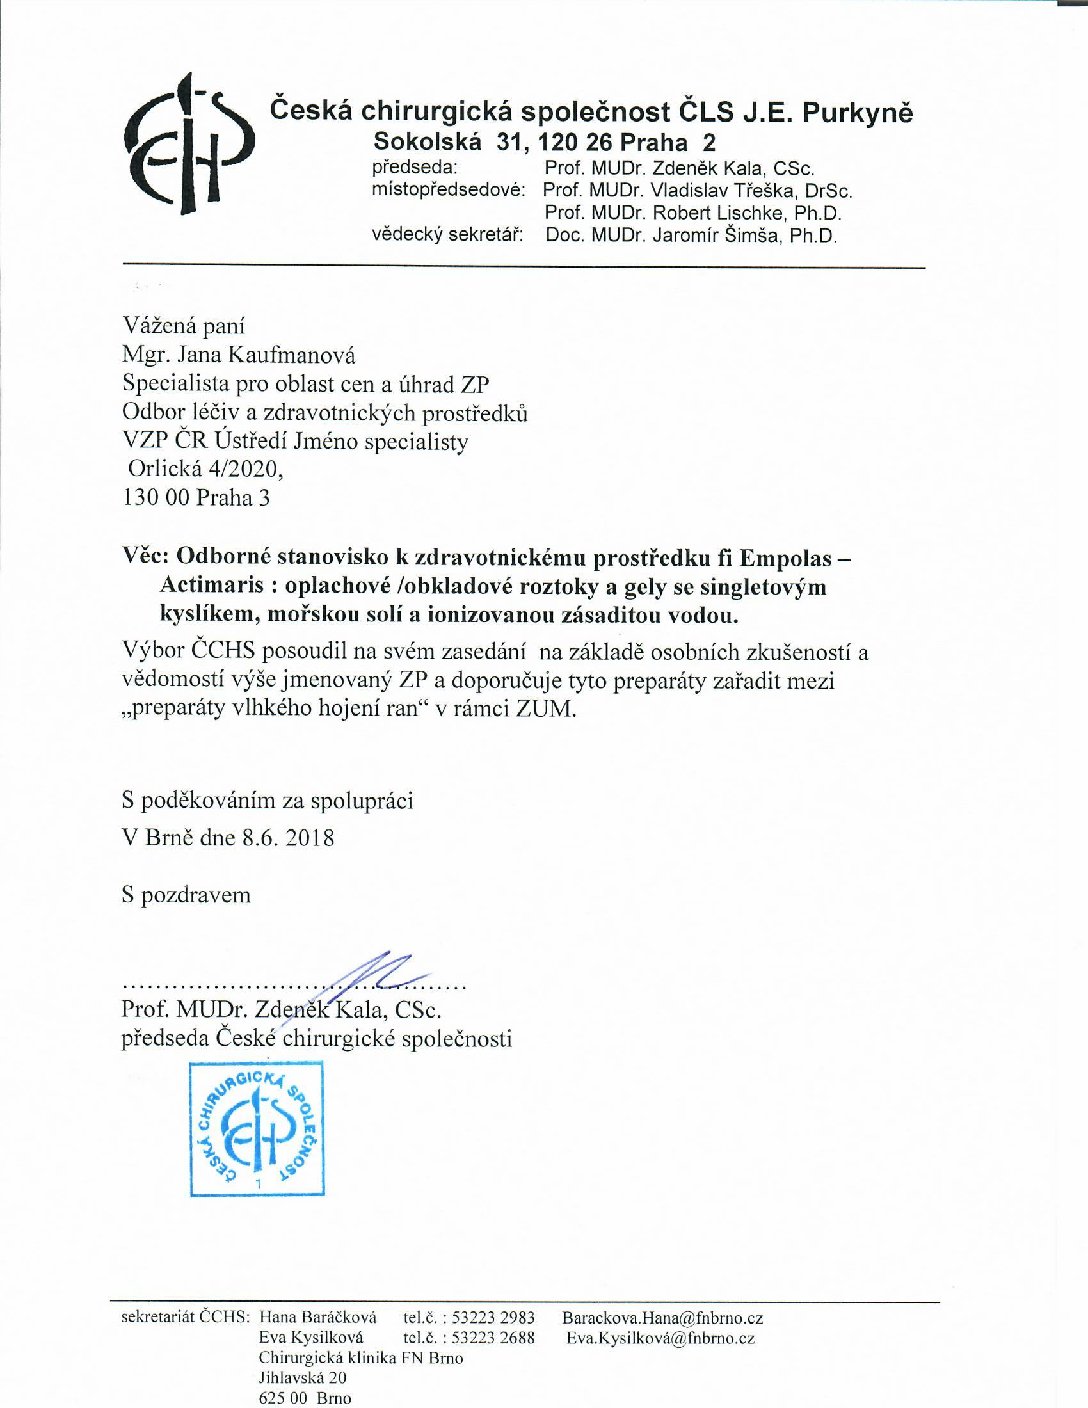 Stanovisko výboru ČCHS ČLS JEP k ZP fi Empolas – Actimaris (8. 6. 2018)